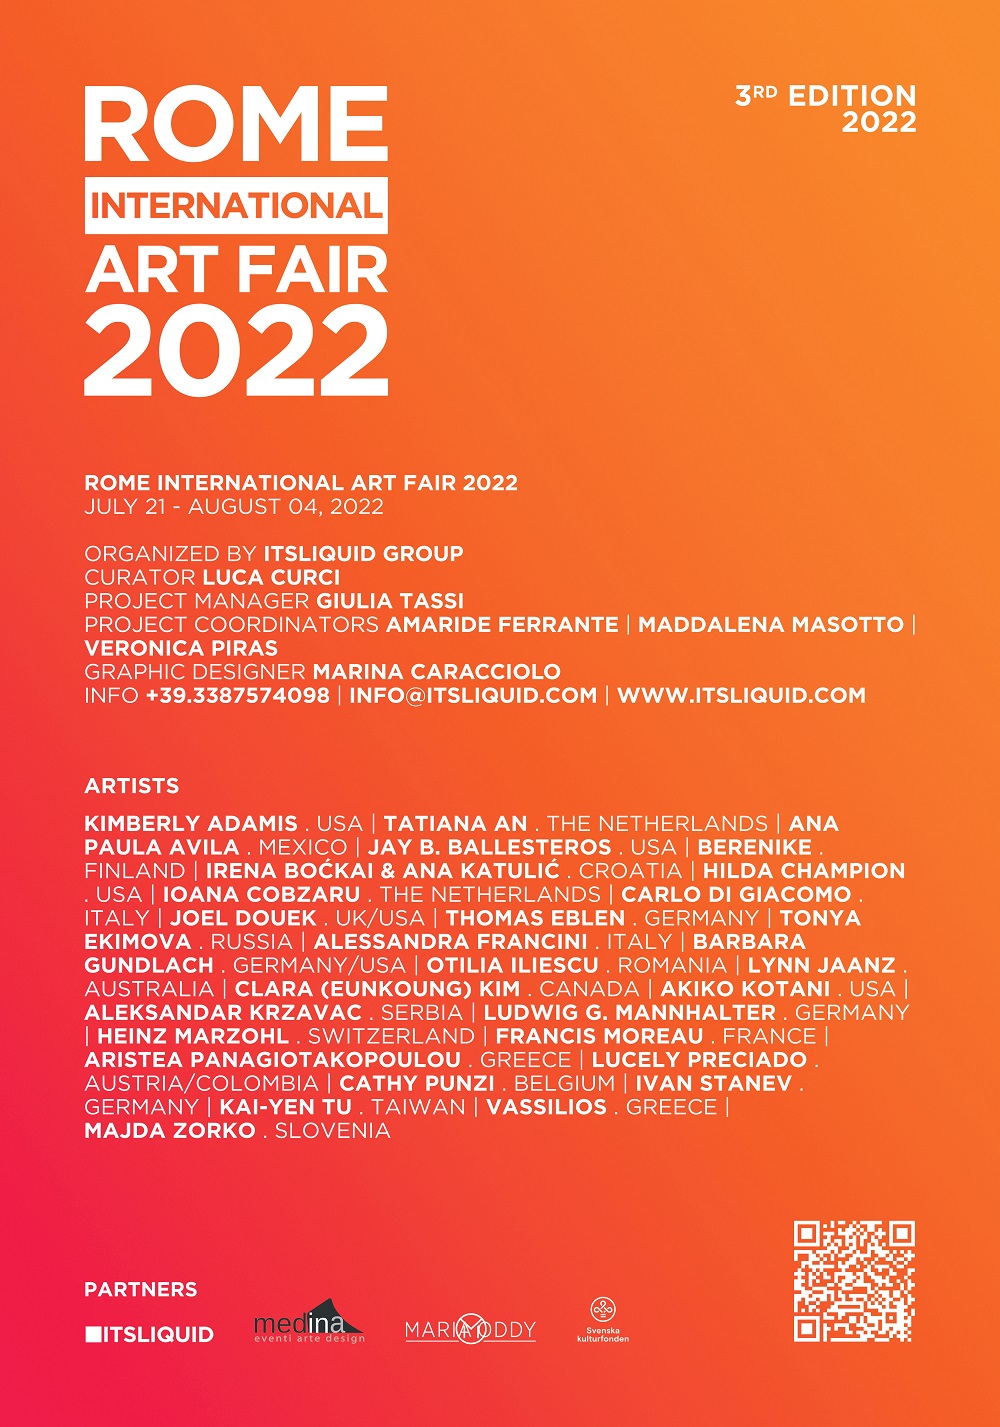 ROME INTERNATIONAL ART FAIR 2022 - 3rd Edition